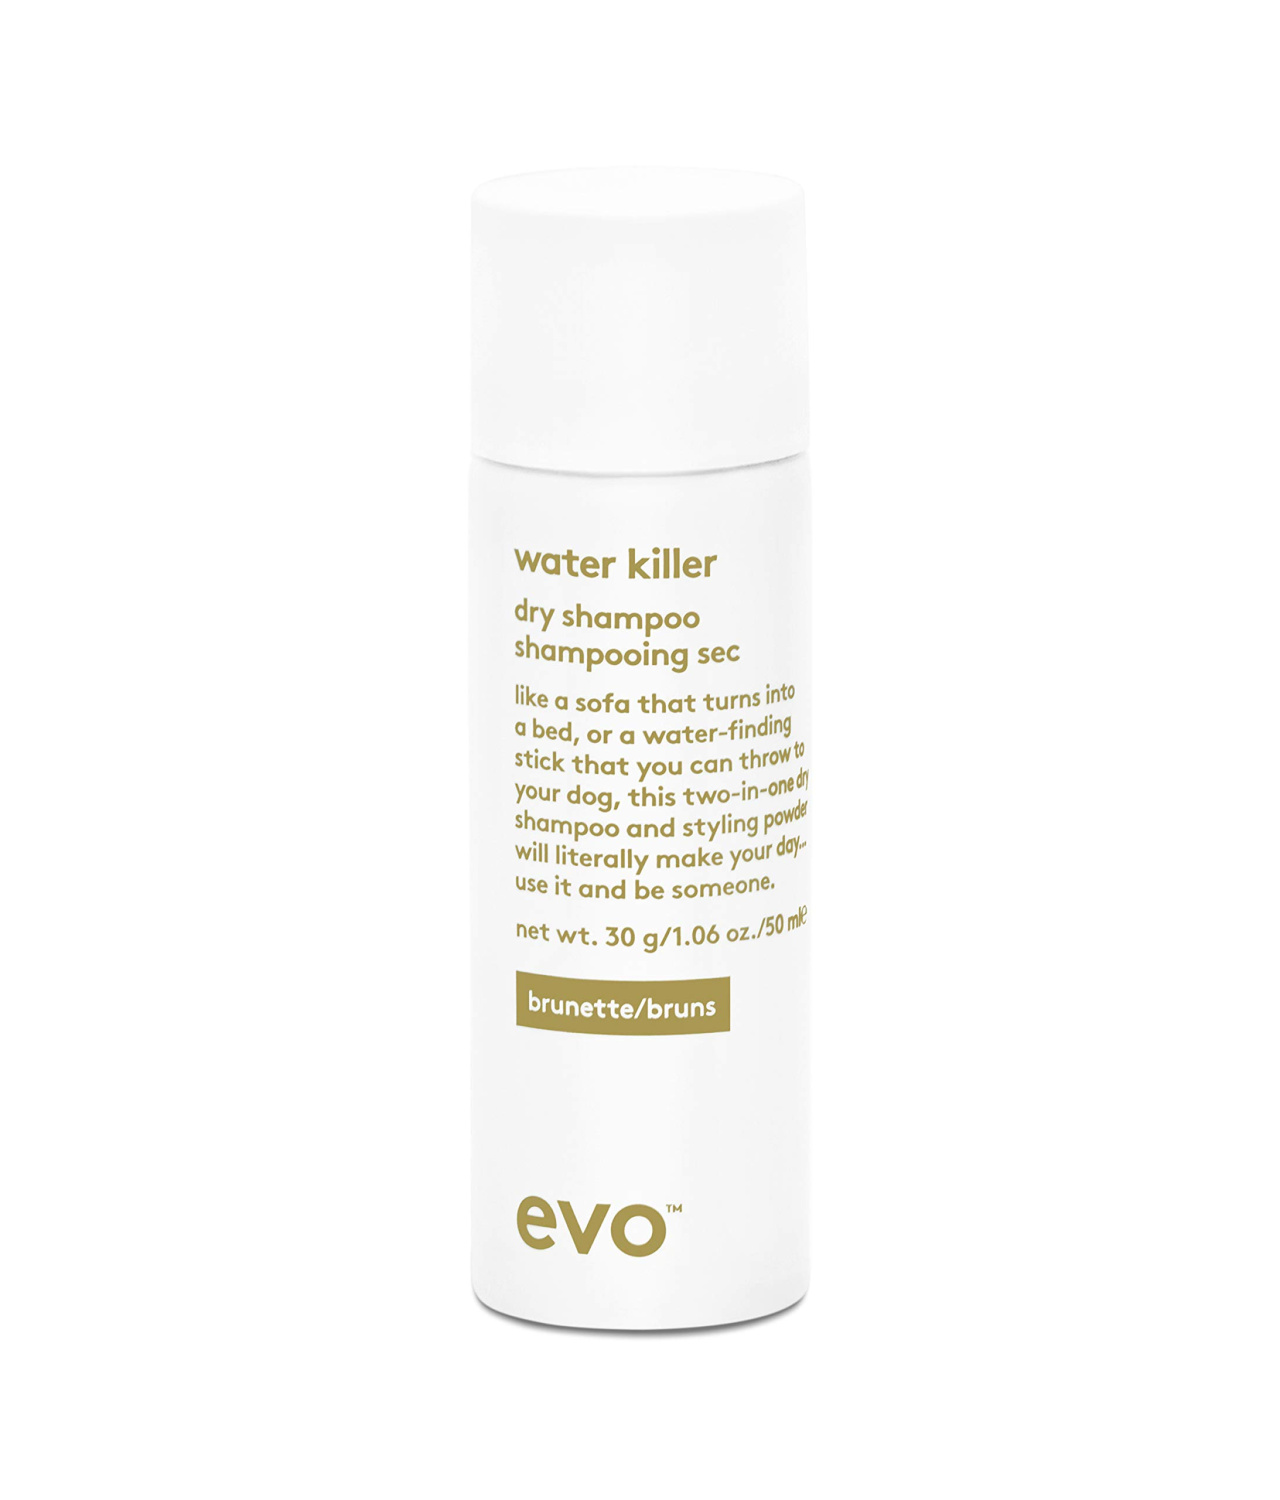 Evo Water Killer Dry Shampoo Brunette 50ml - интернет-магазин профессиональной косметики Spadream, изображение 47560